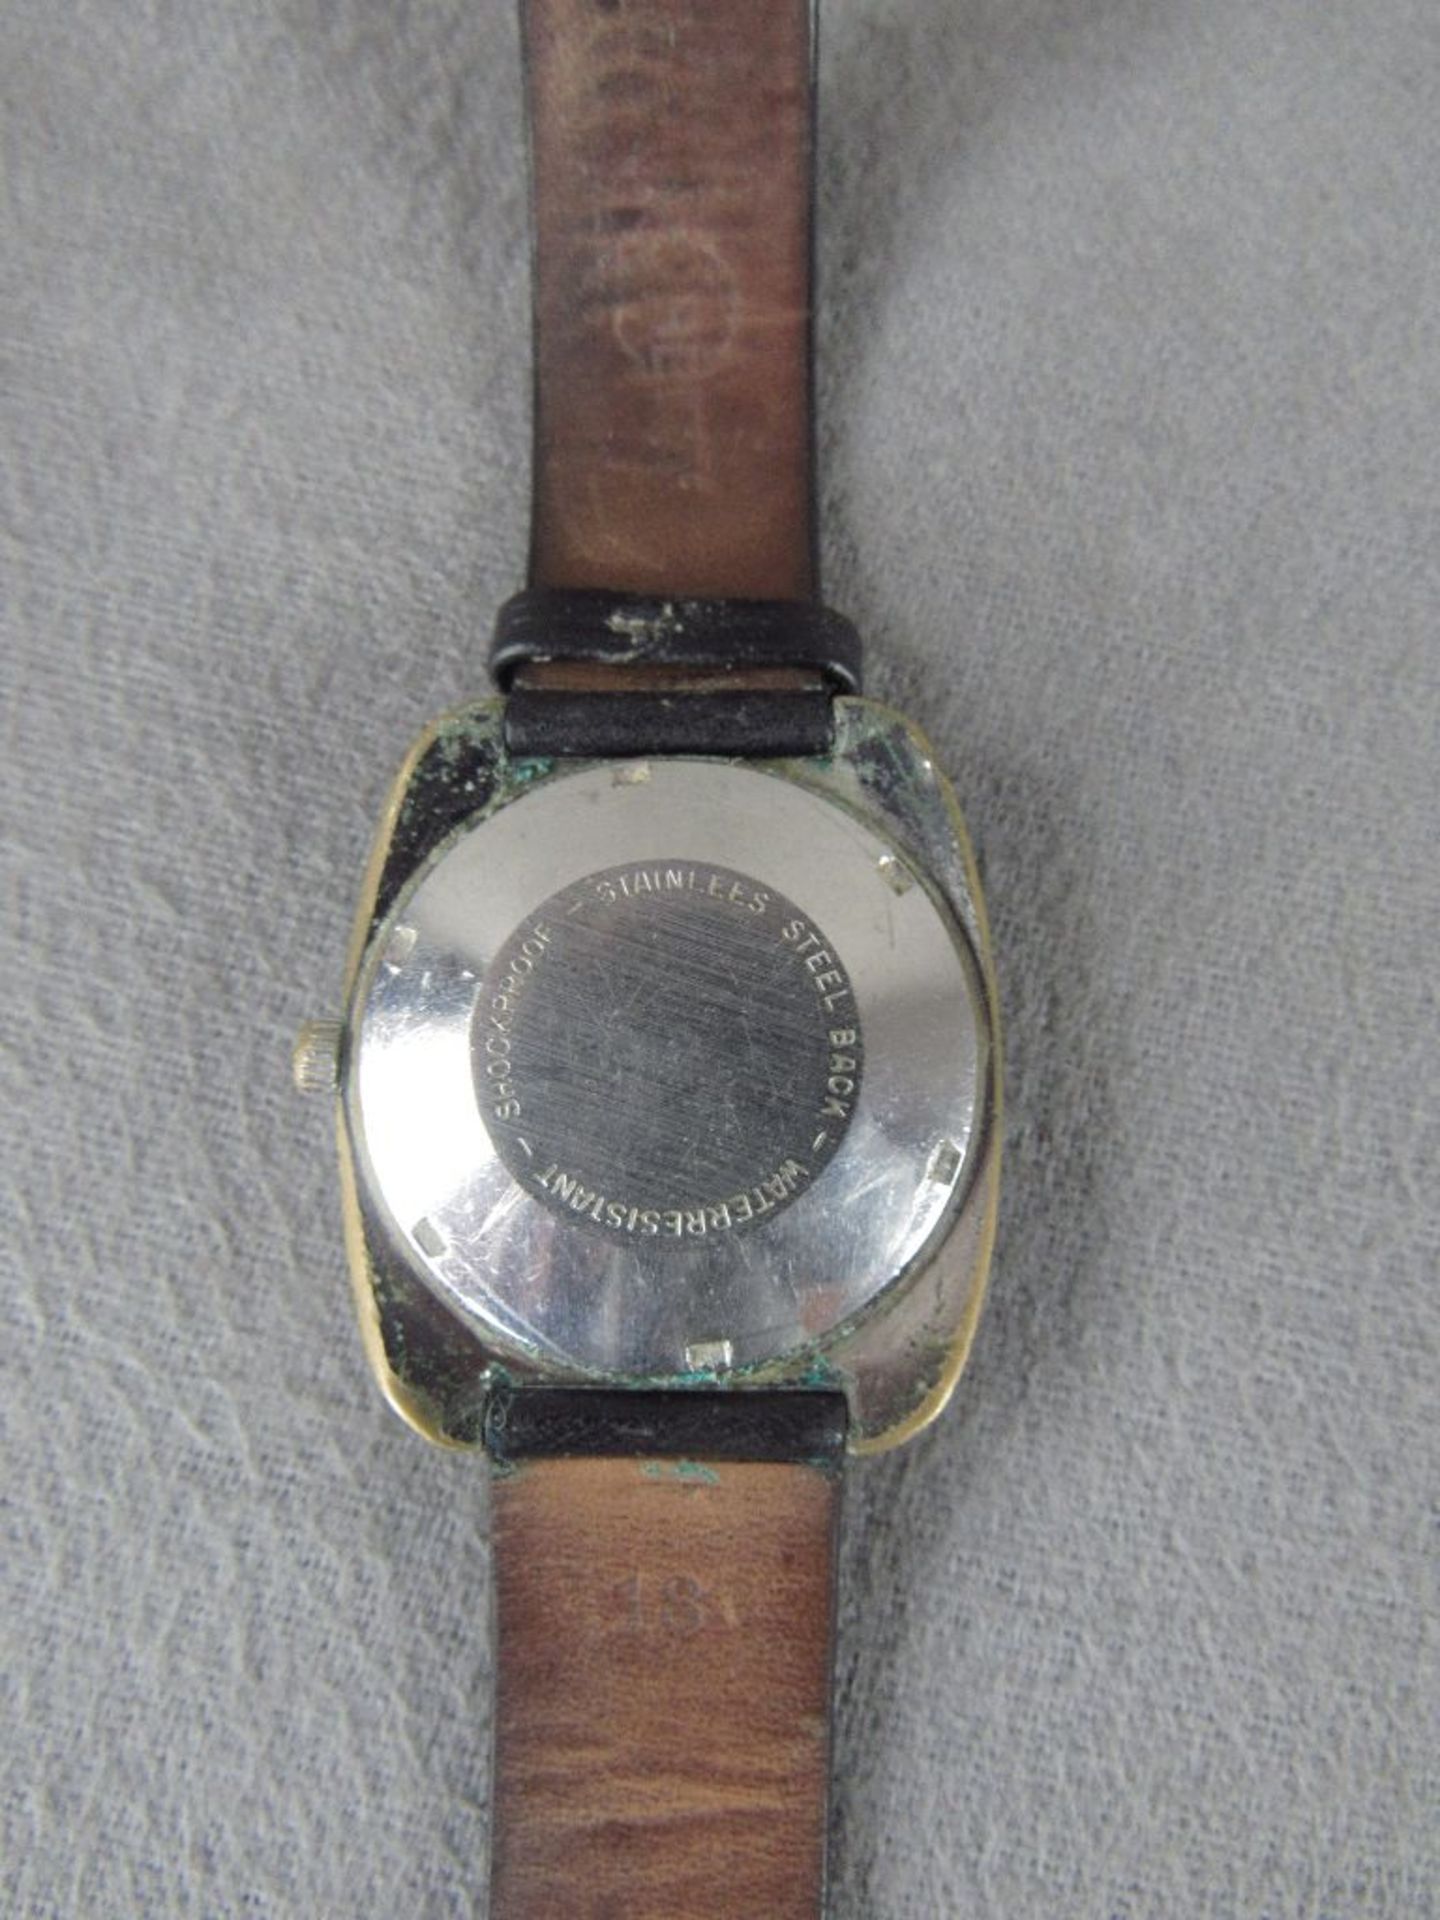 Vintage 70er Jahre Herrenarmbanduhr Junghans Automatik läuft an - Bild 4 aus 5